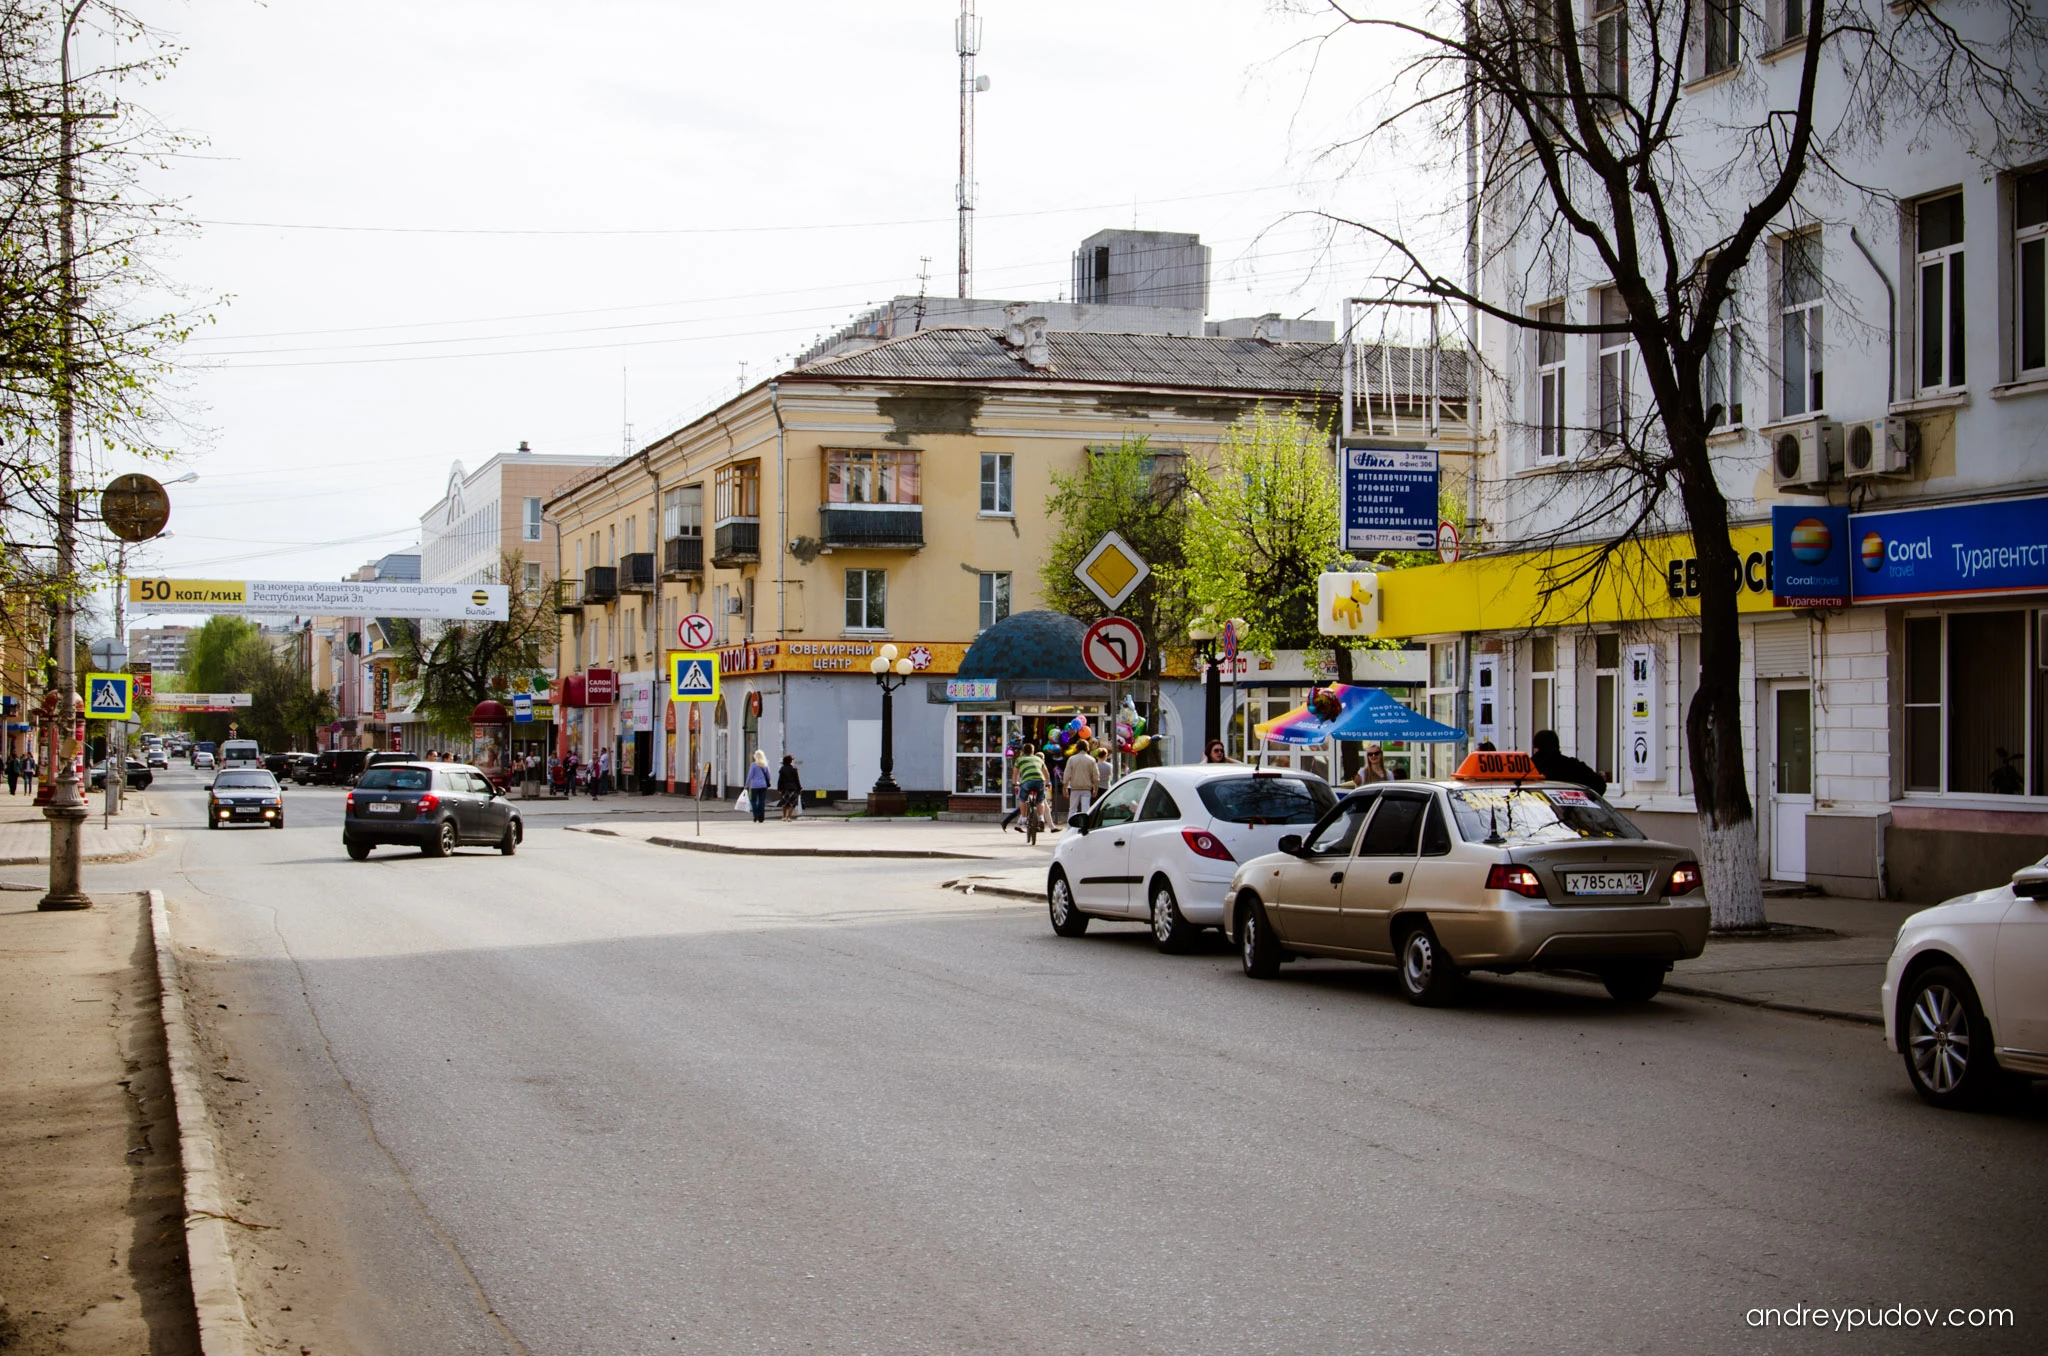 Andrey Pudov Yoshkar-Ola. Tsar's town on Kokshaga River